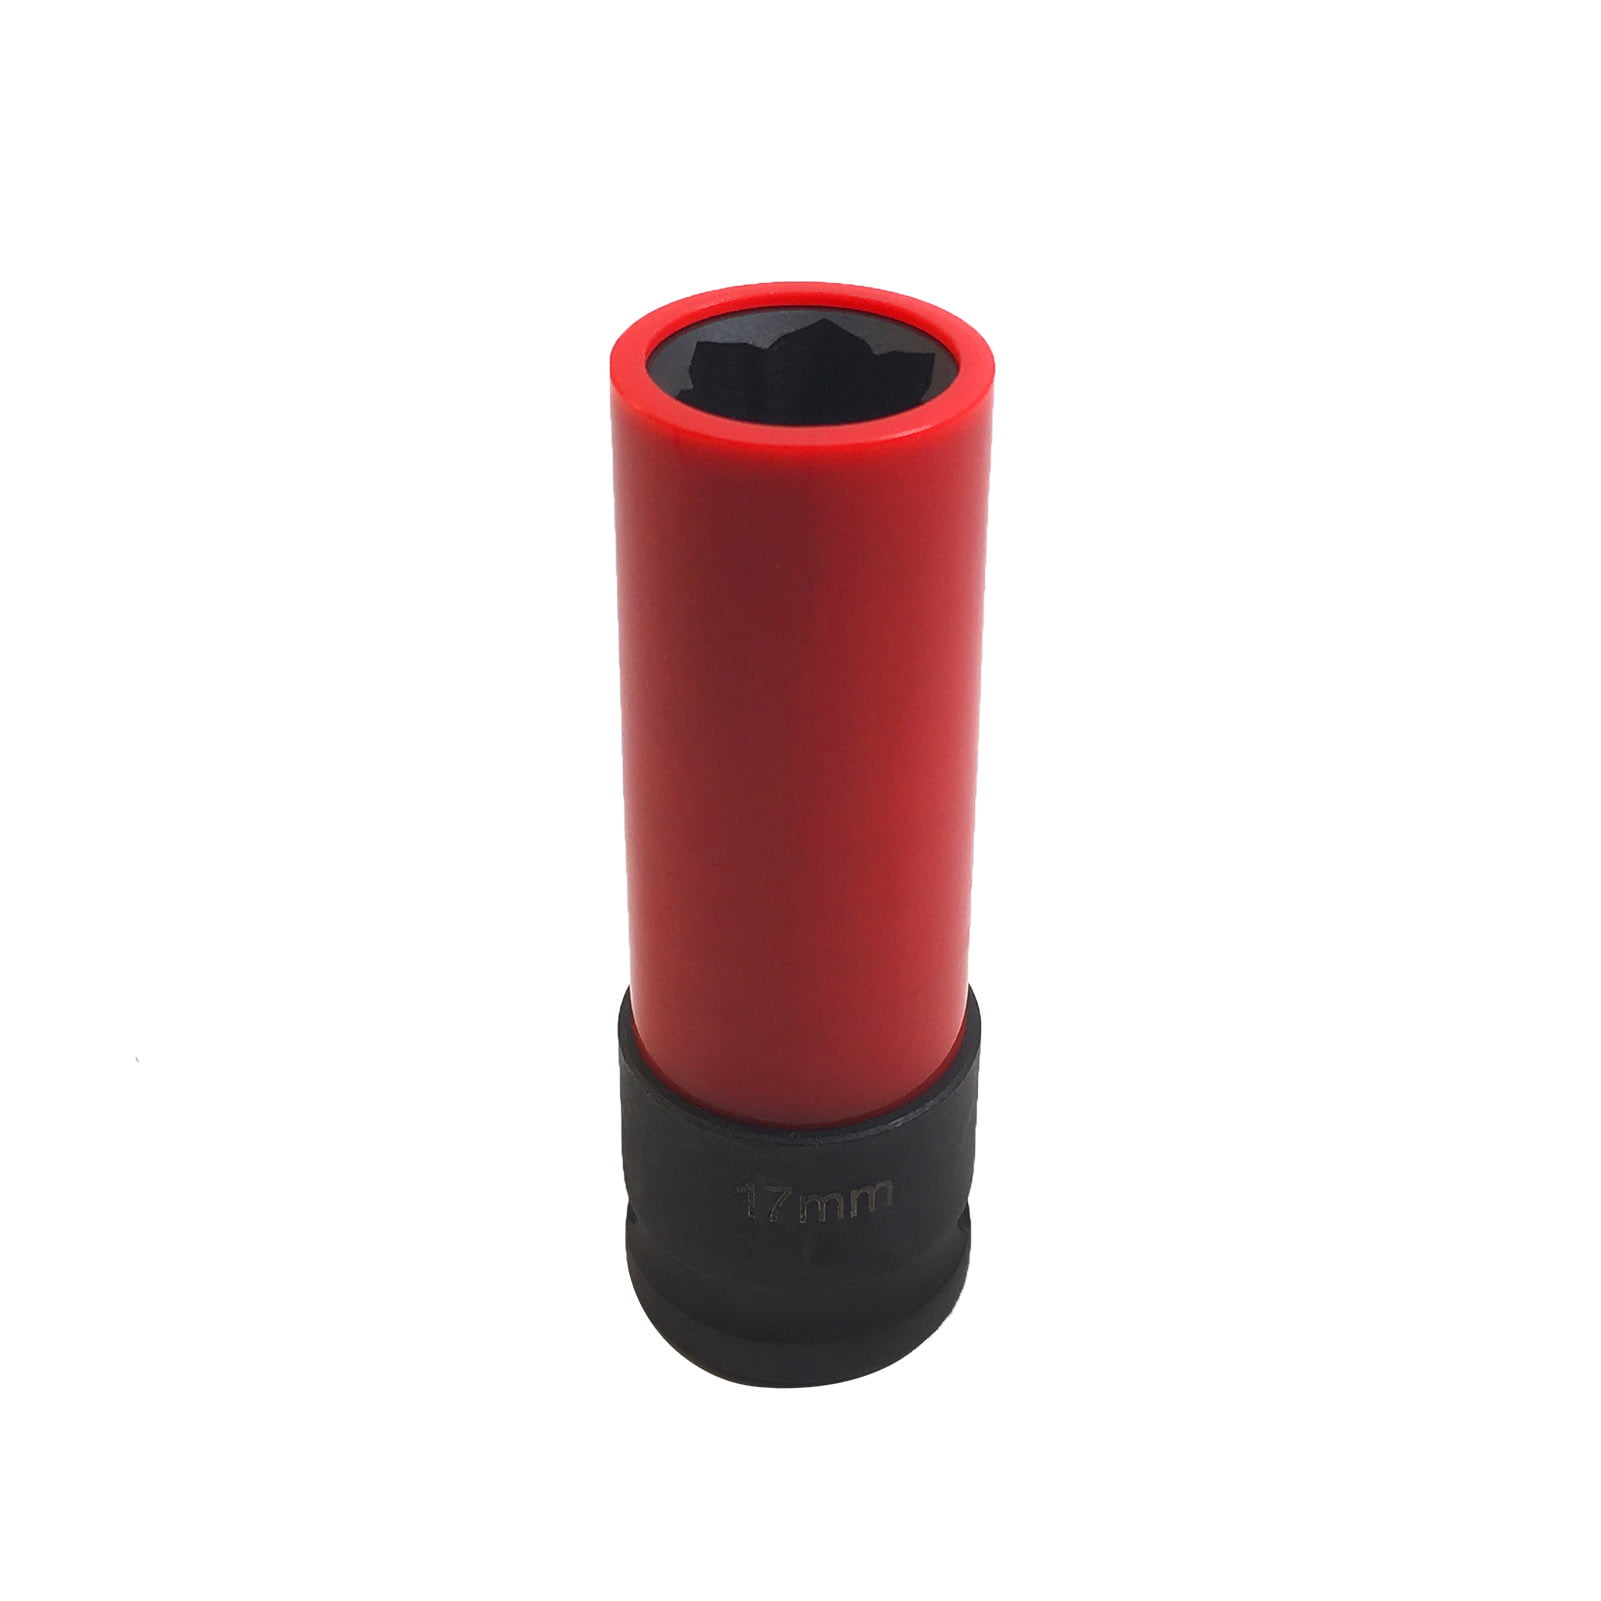 Dankera CTA Tool 4218 Flower Design Lug Nut Socket,17mm Universal for Benz Mercedes S Series 